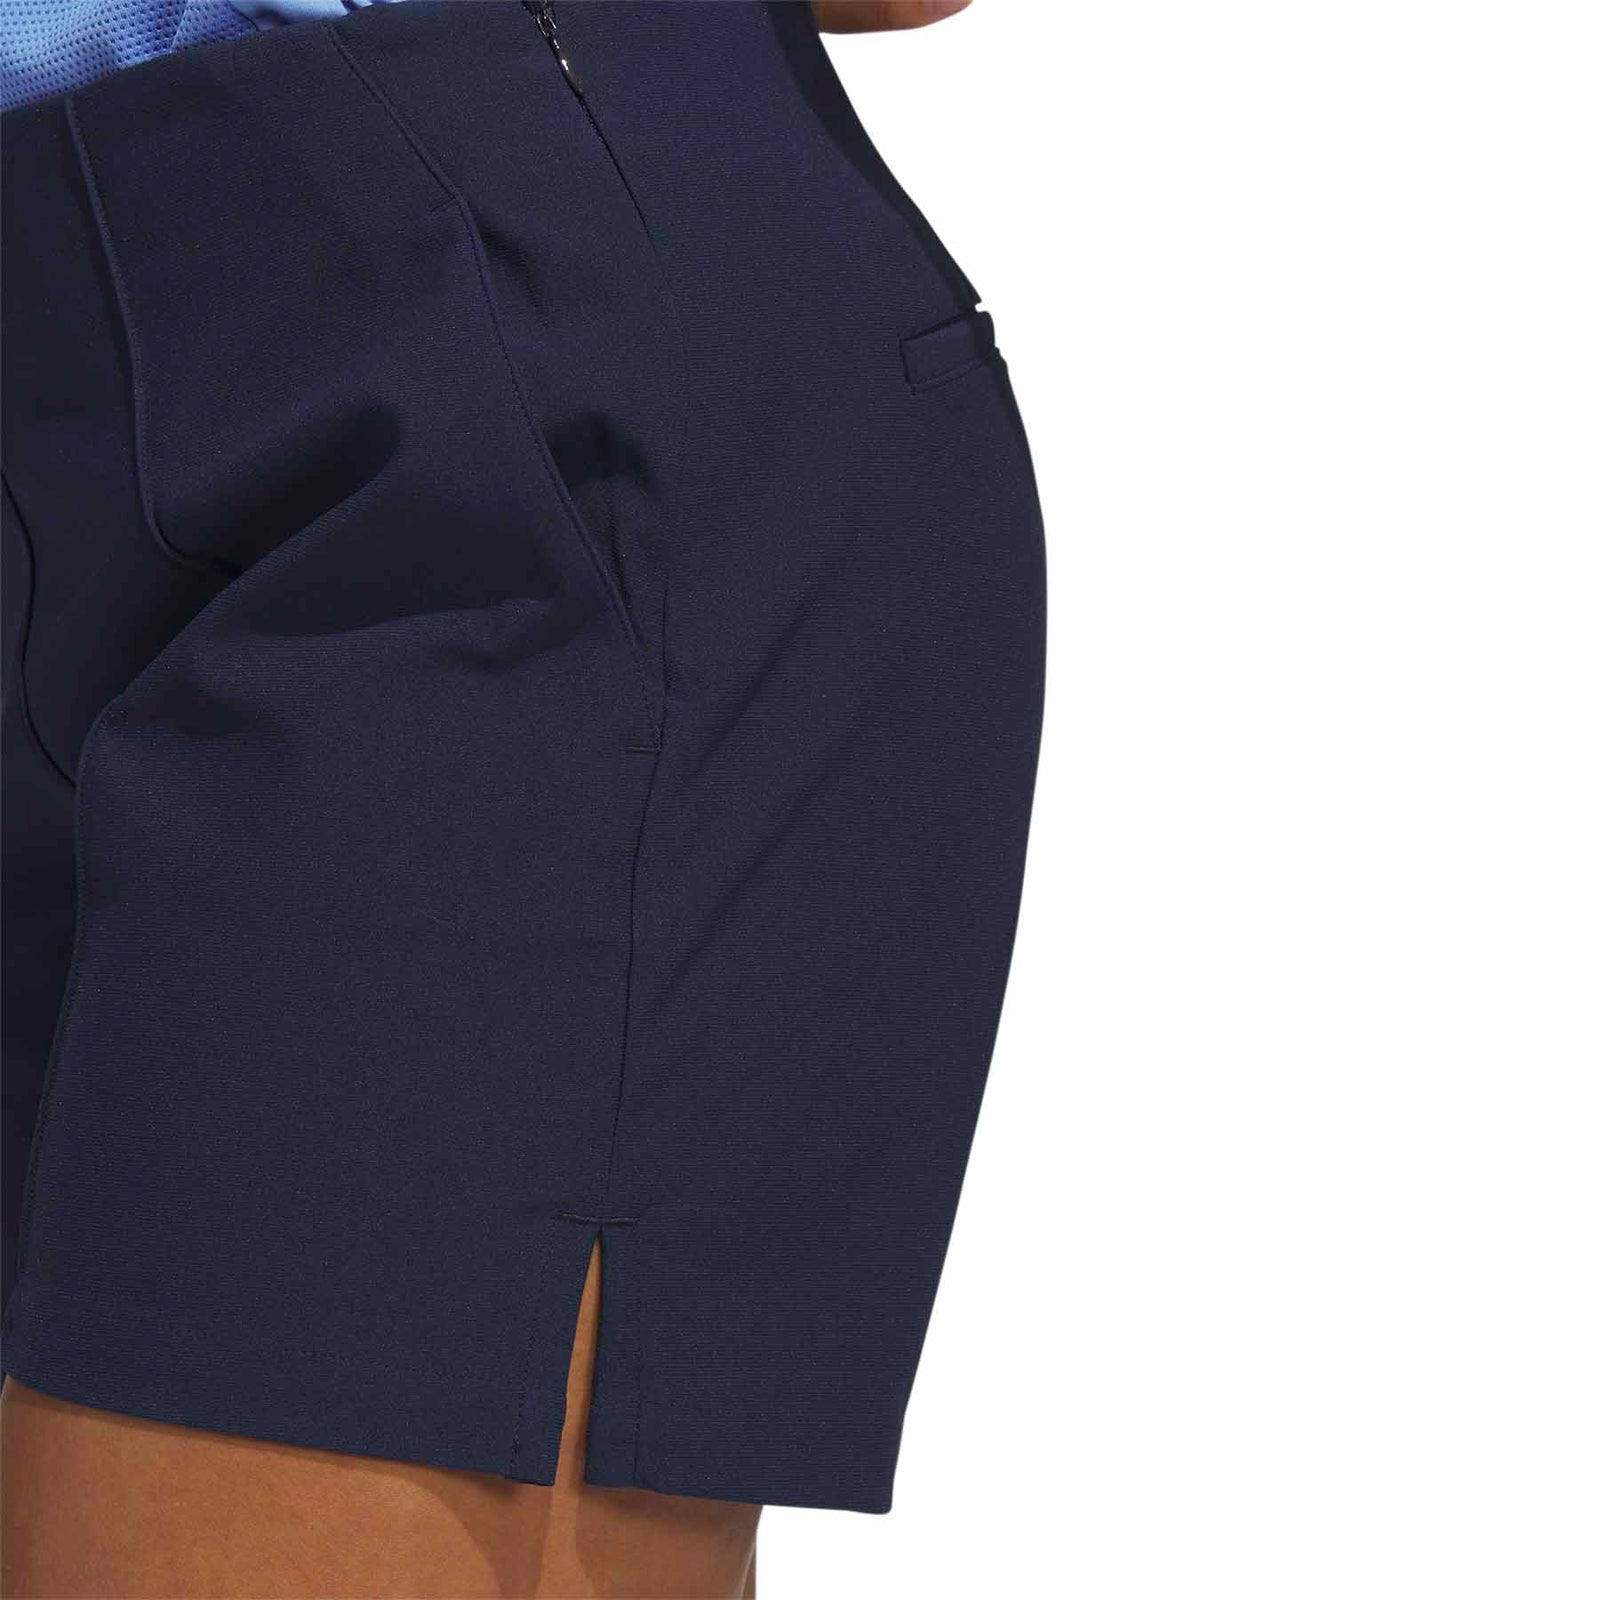 Adidas Women's Pintuck 5-Inch Pull-On Golf Shorts 2024 